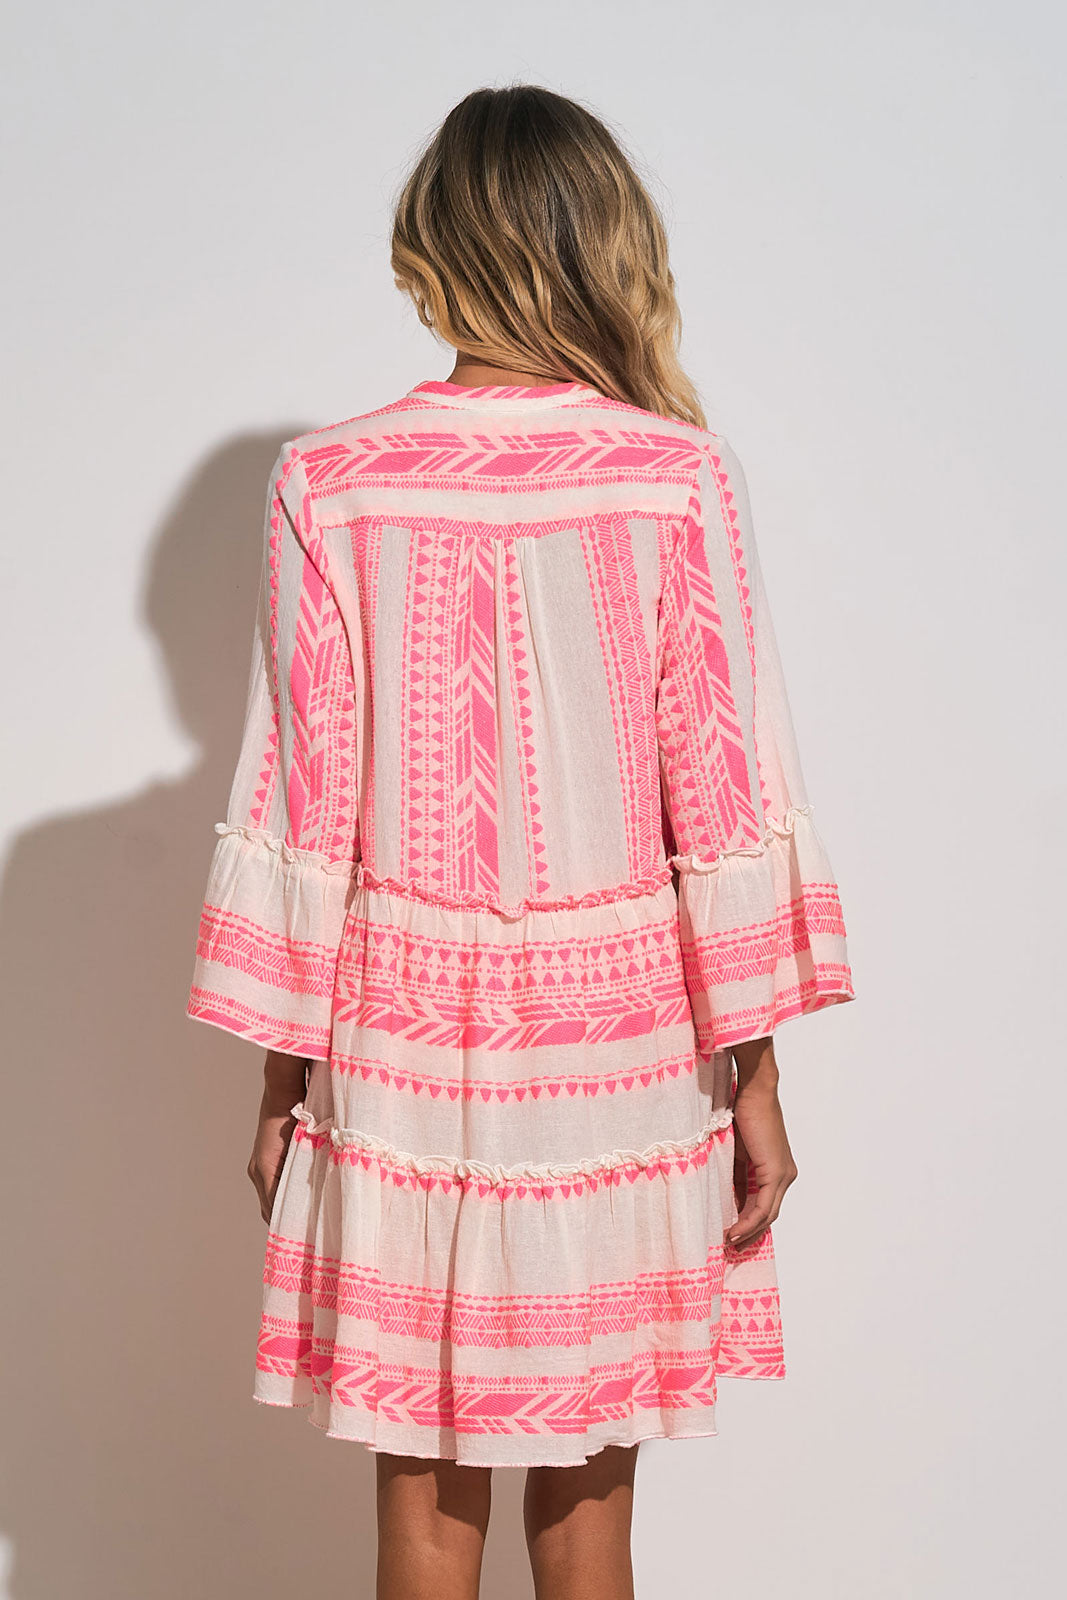 Long Sleeve Pink Print Dress